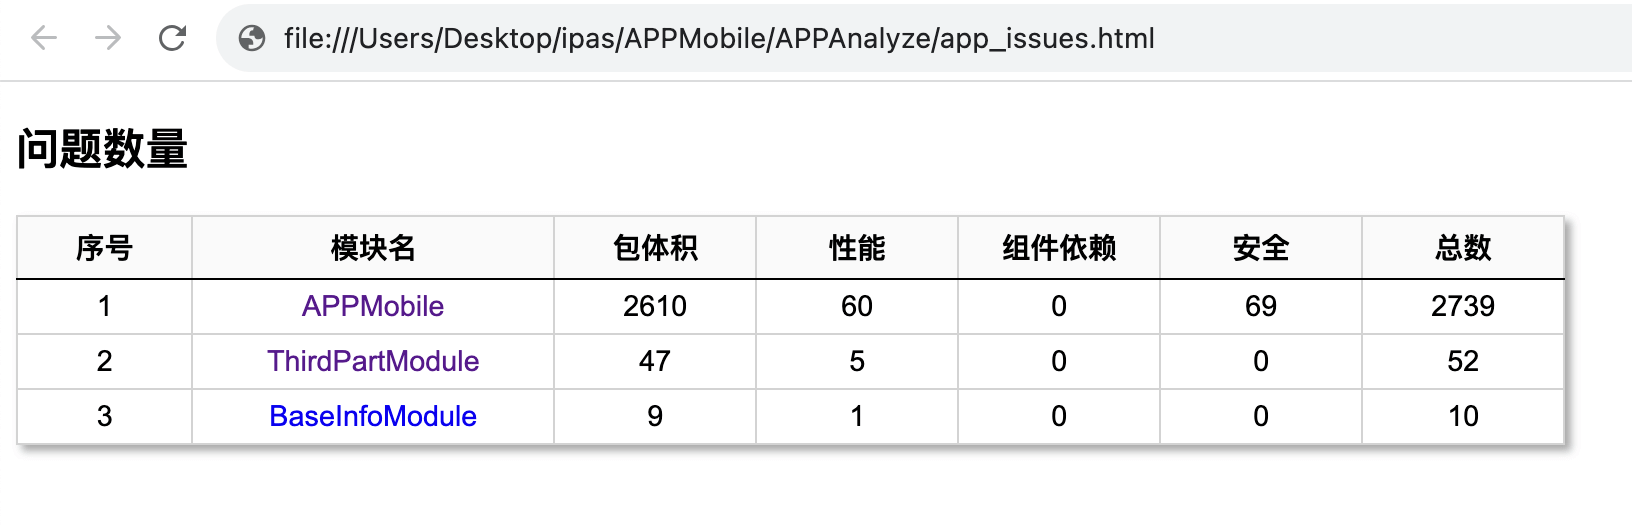 iOS APP包分析工具 | 京东云技术团队_组件化_05